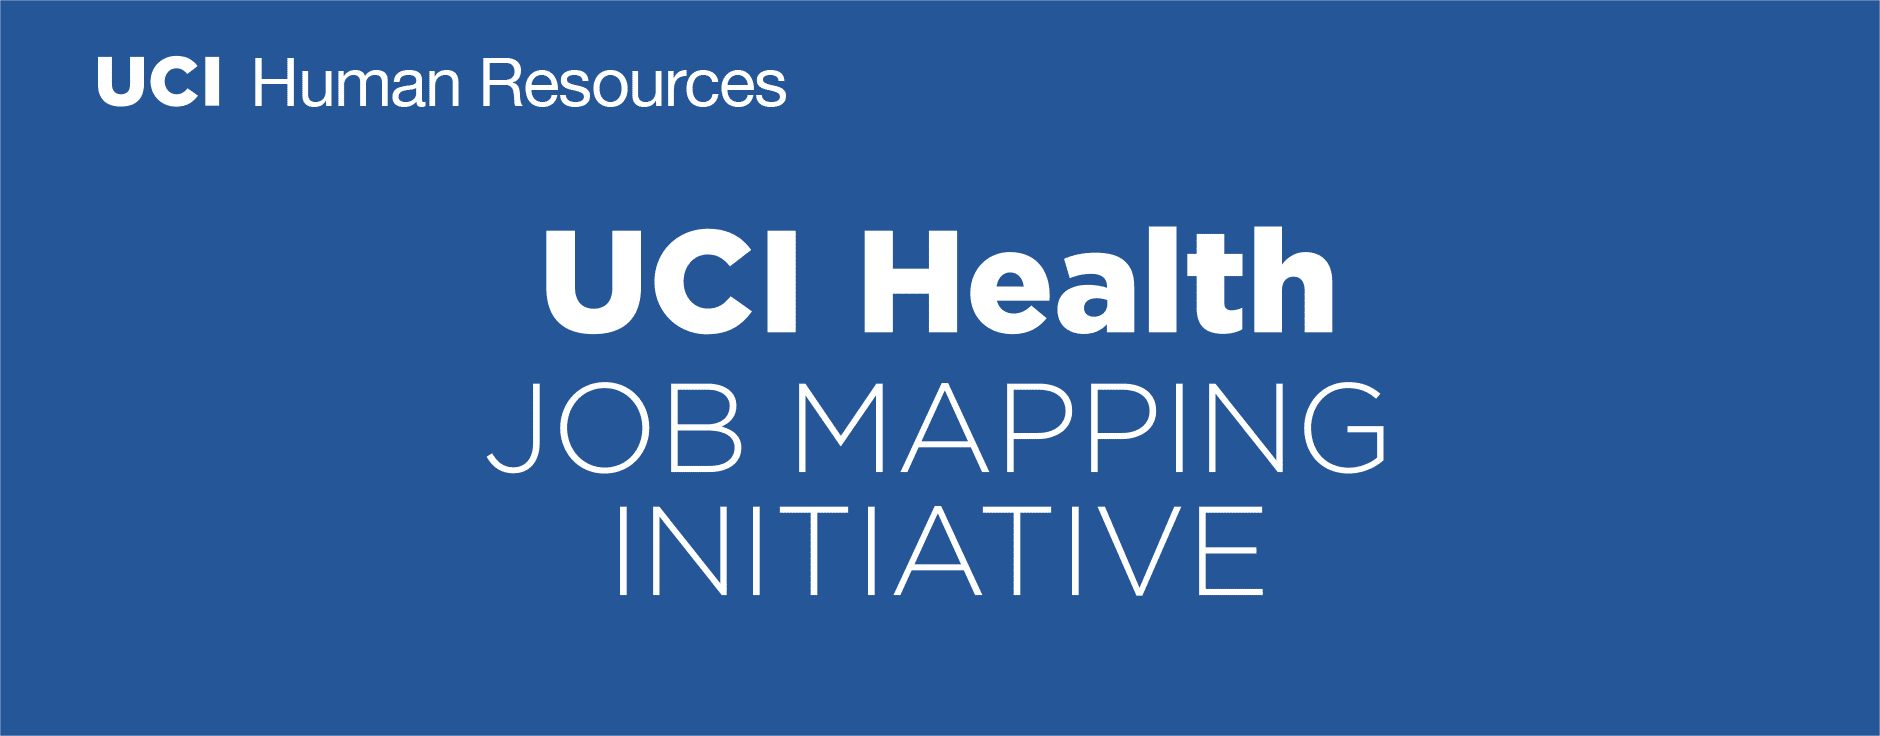 UCI Health - Job MApping Initiative